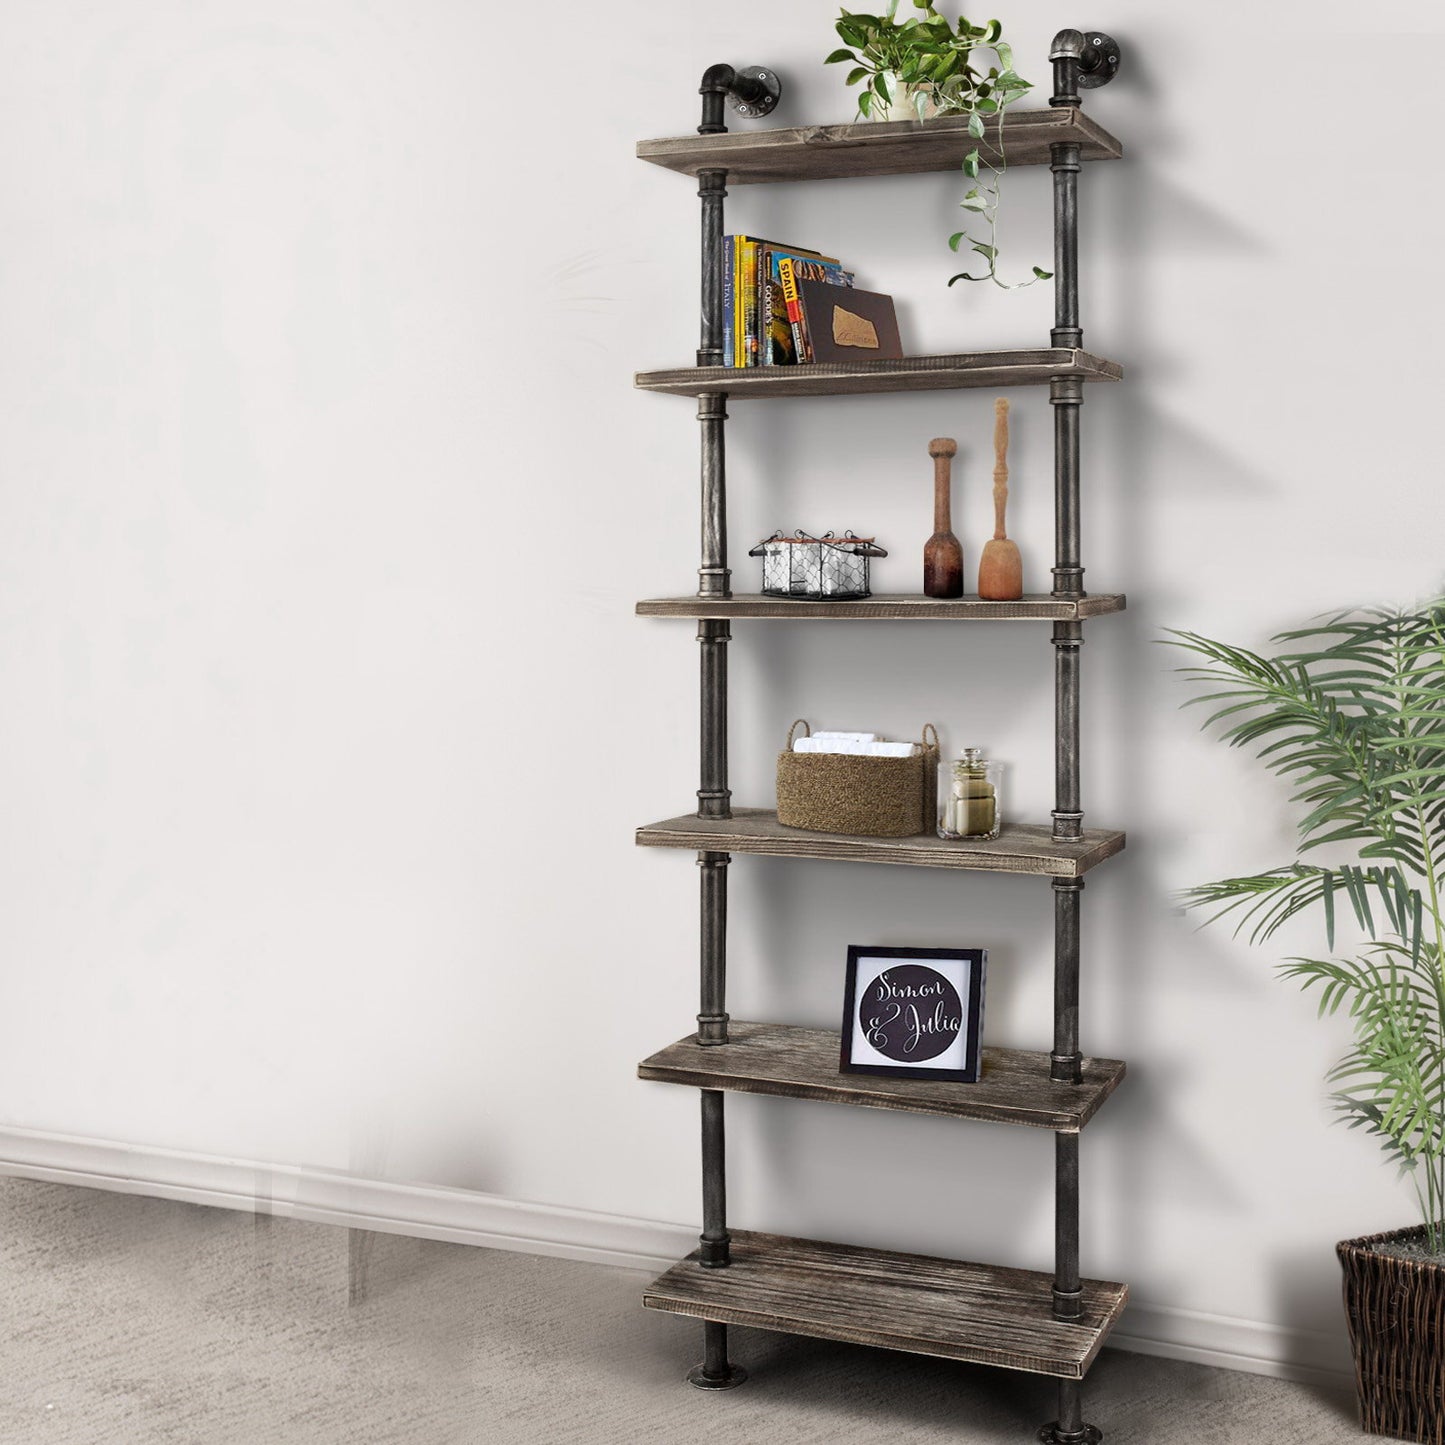 Rustic Wall Shelves Display Bookshelf Industrial DIY Pipe Shelf Brackets - image6